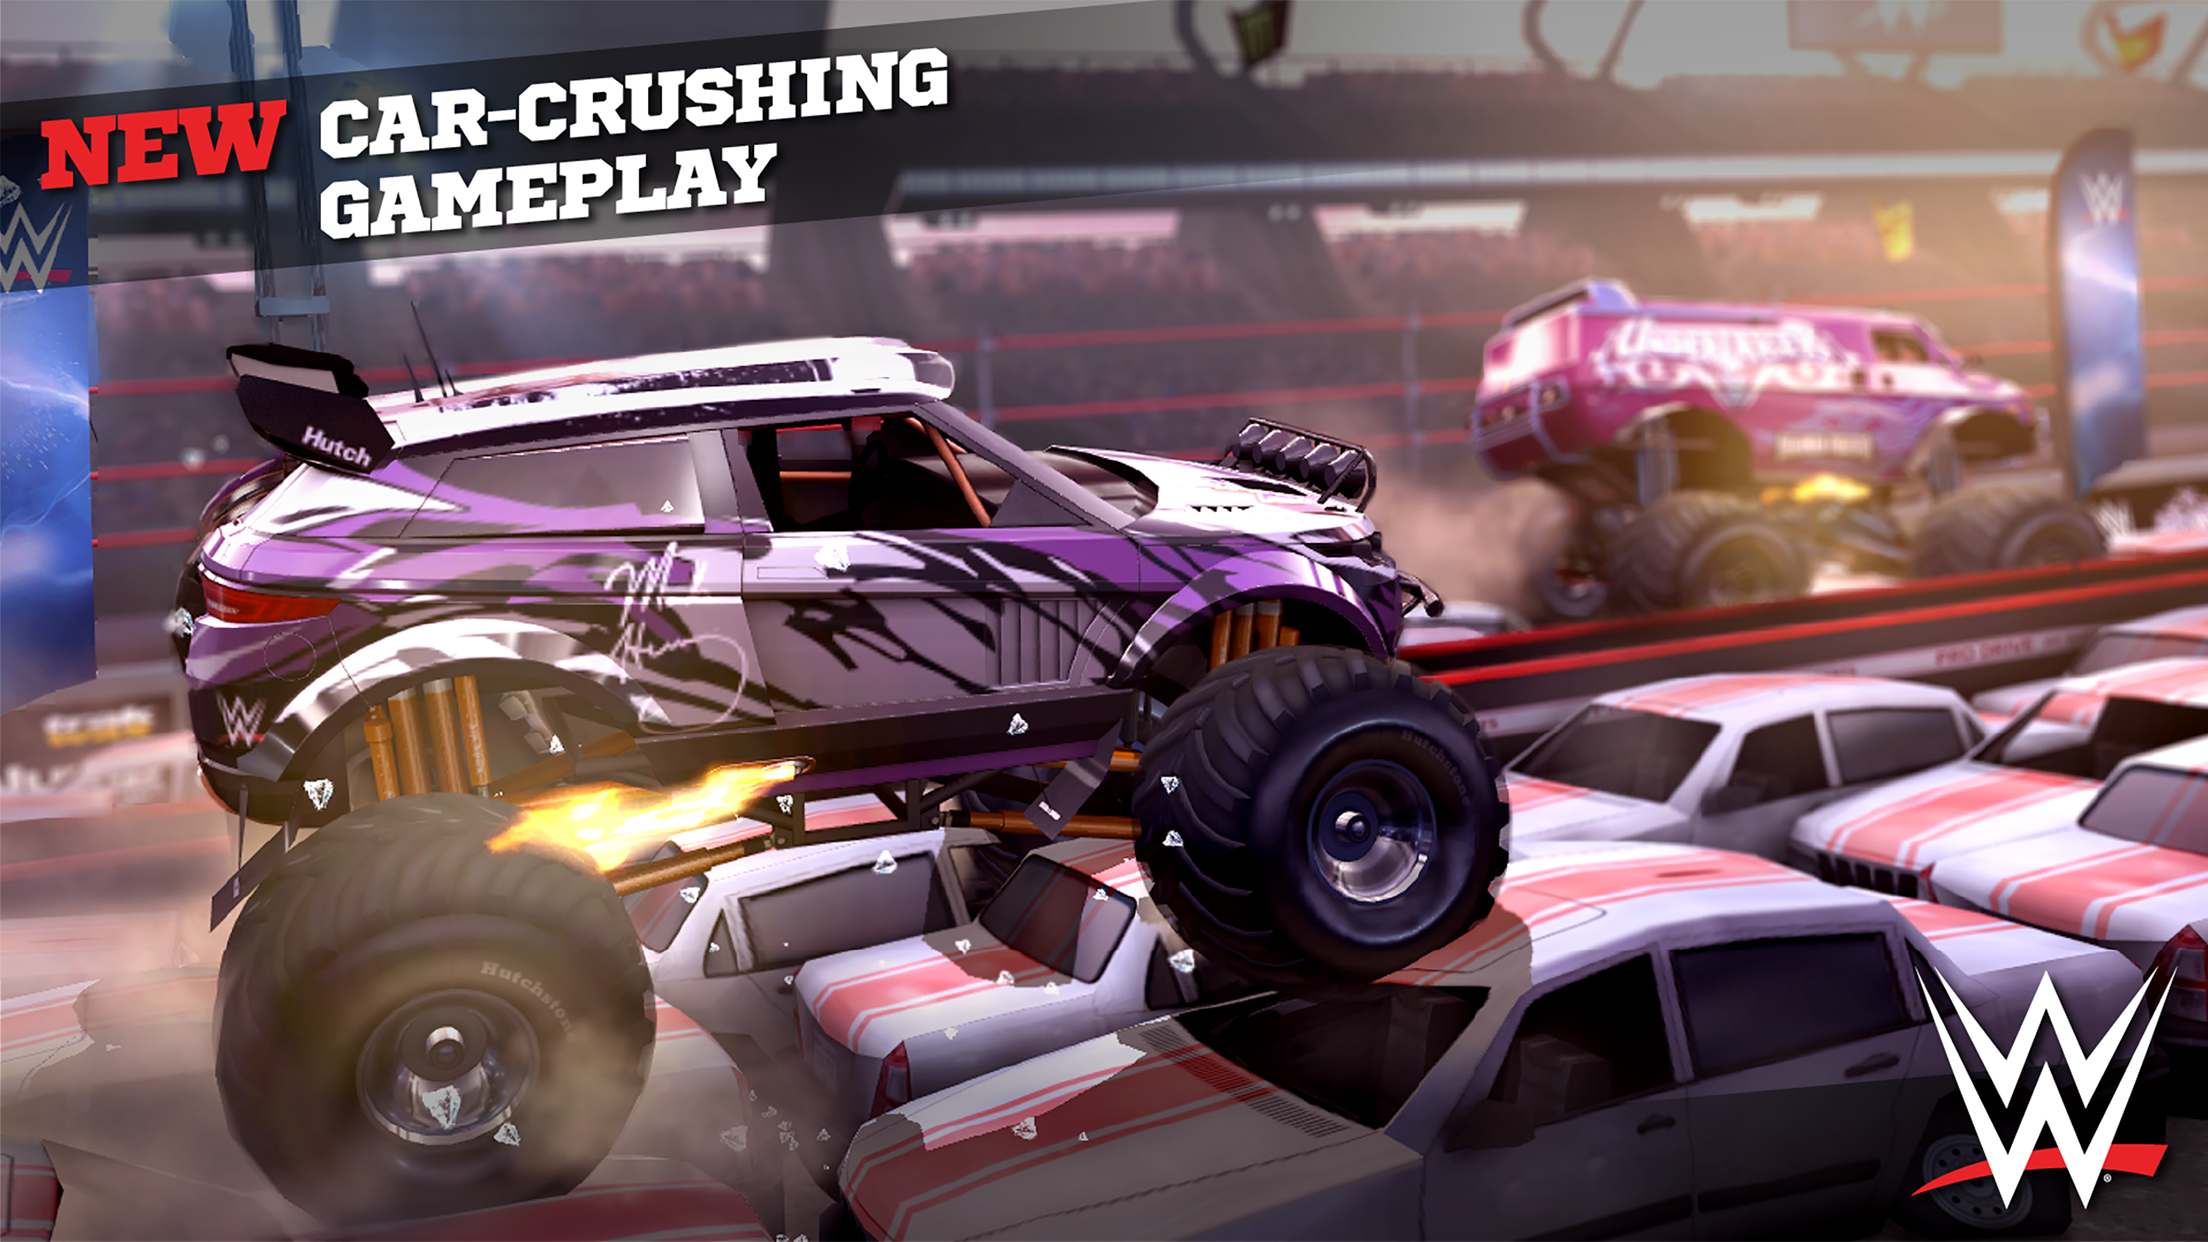 Screenshot of MMX Racing